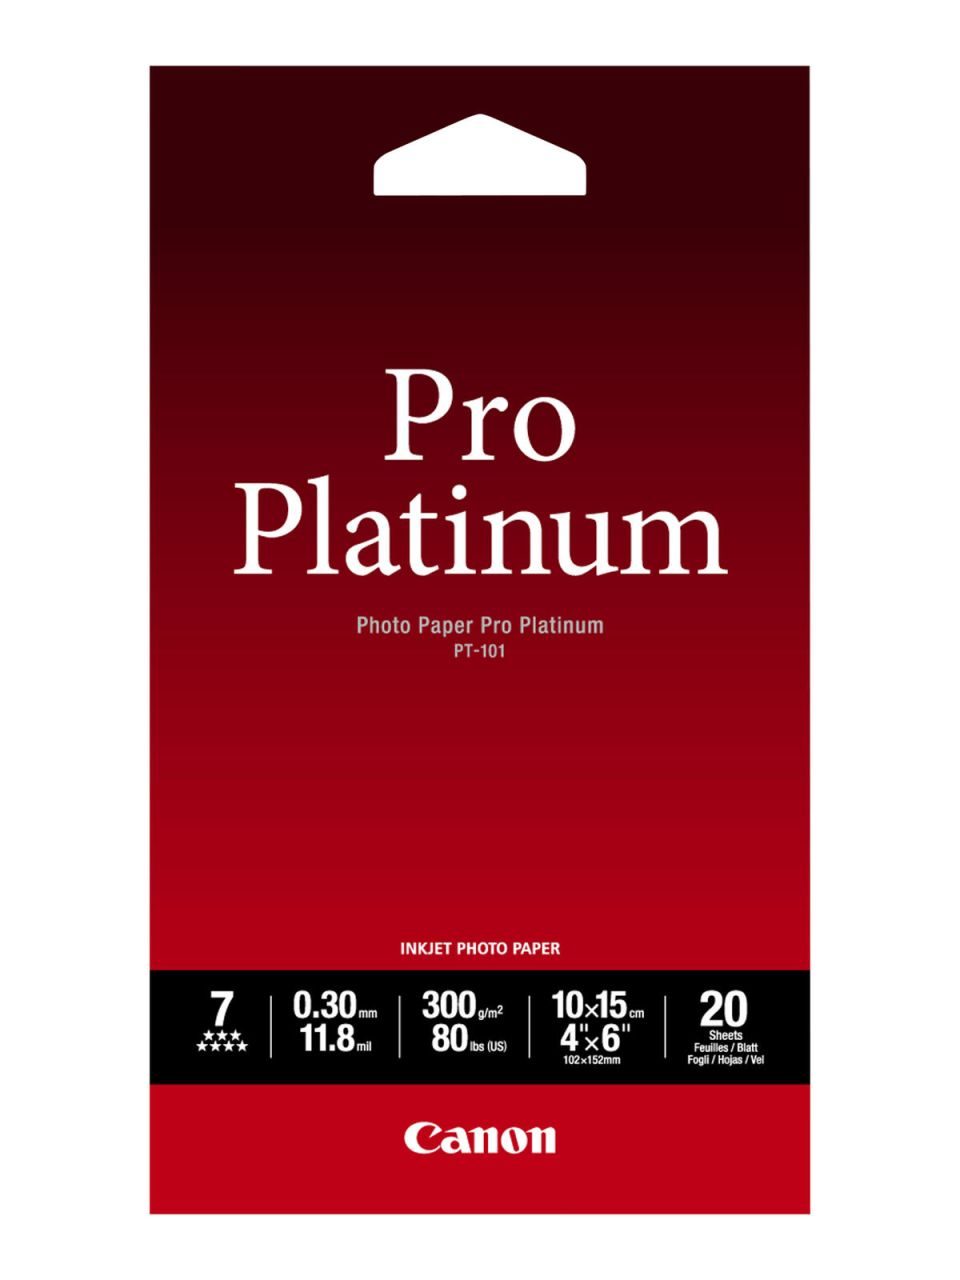 Canon PT-101 Pro Platinum Fotopapier glänzend 100x150mm 300 g/m² - 20 Blatt